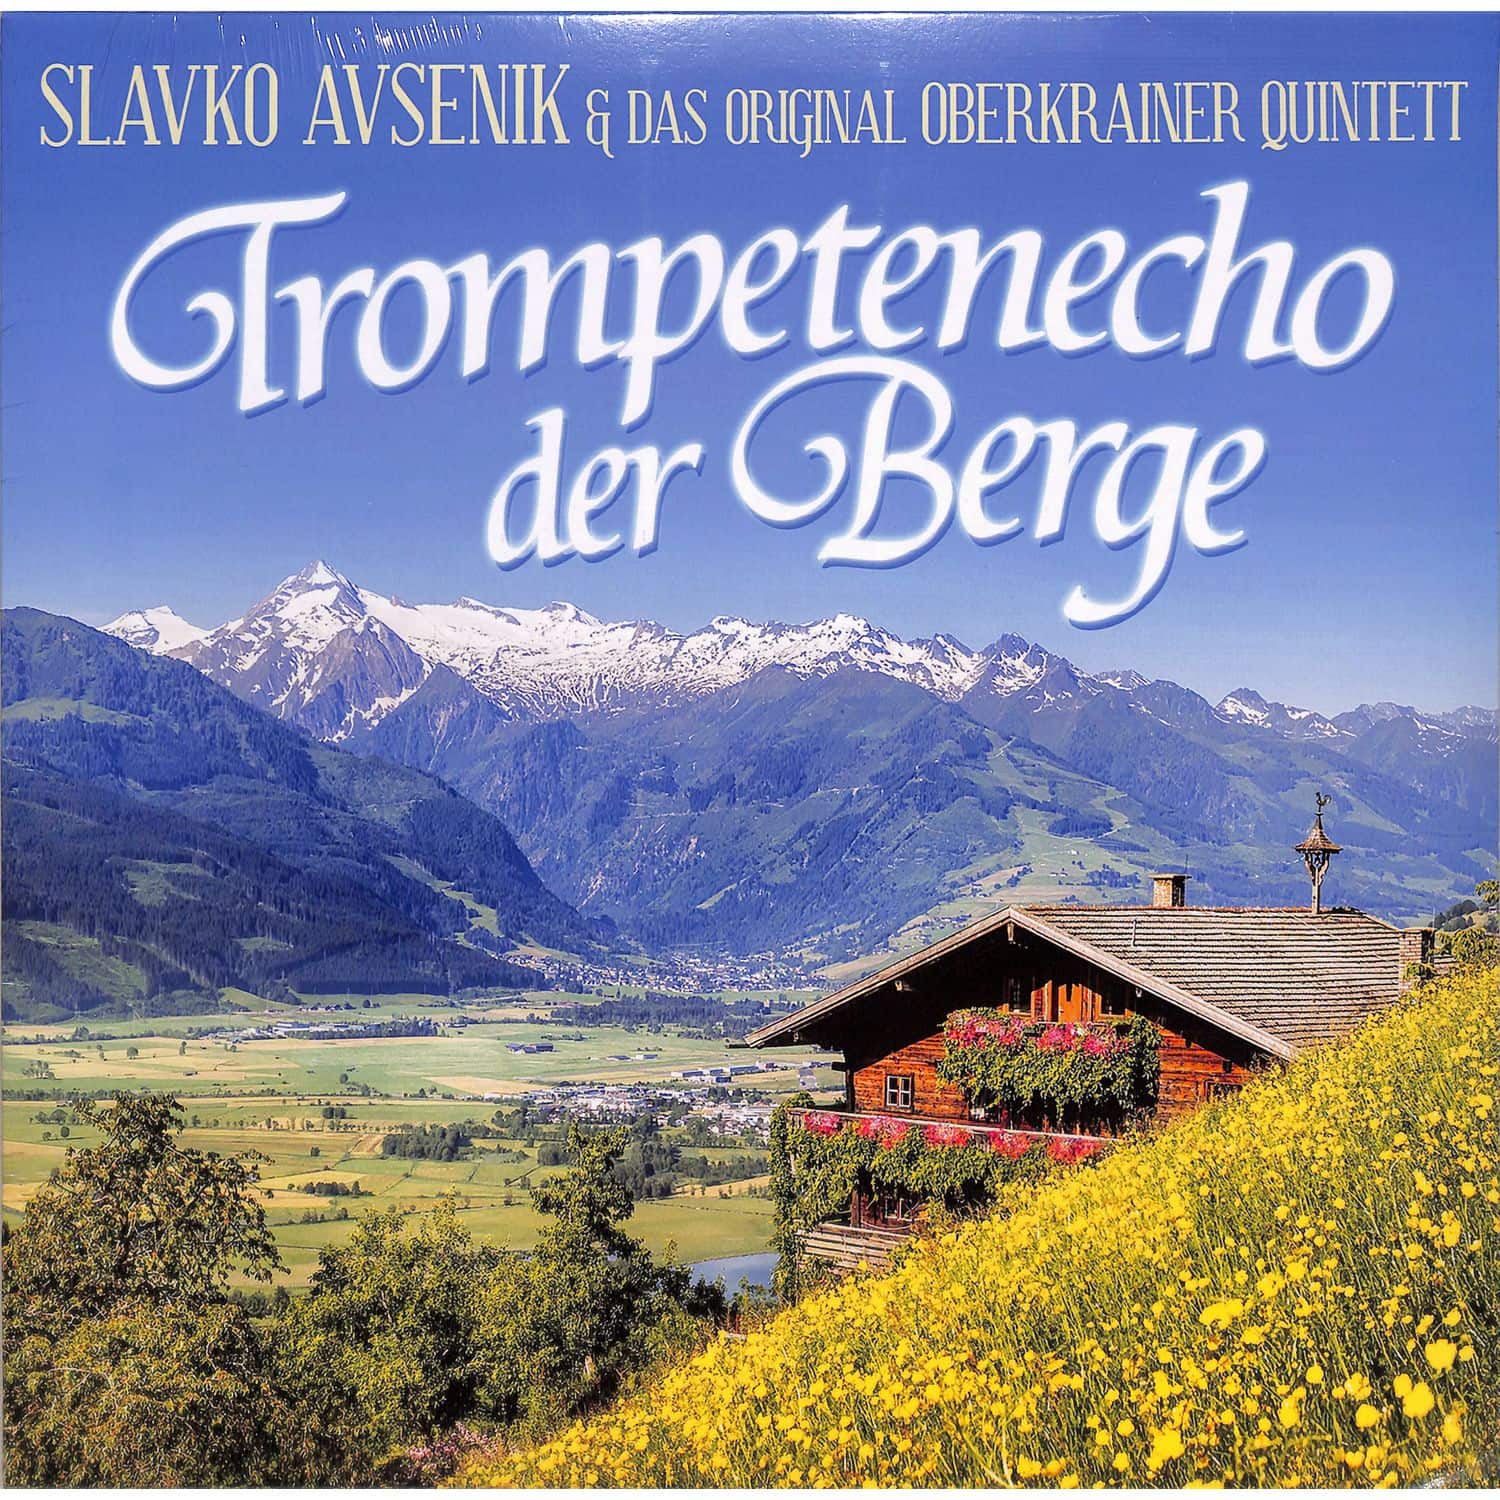 Slavko Senik & Original Oberkrainer Quintett - TROMPETENECHO DER BERGE 